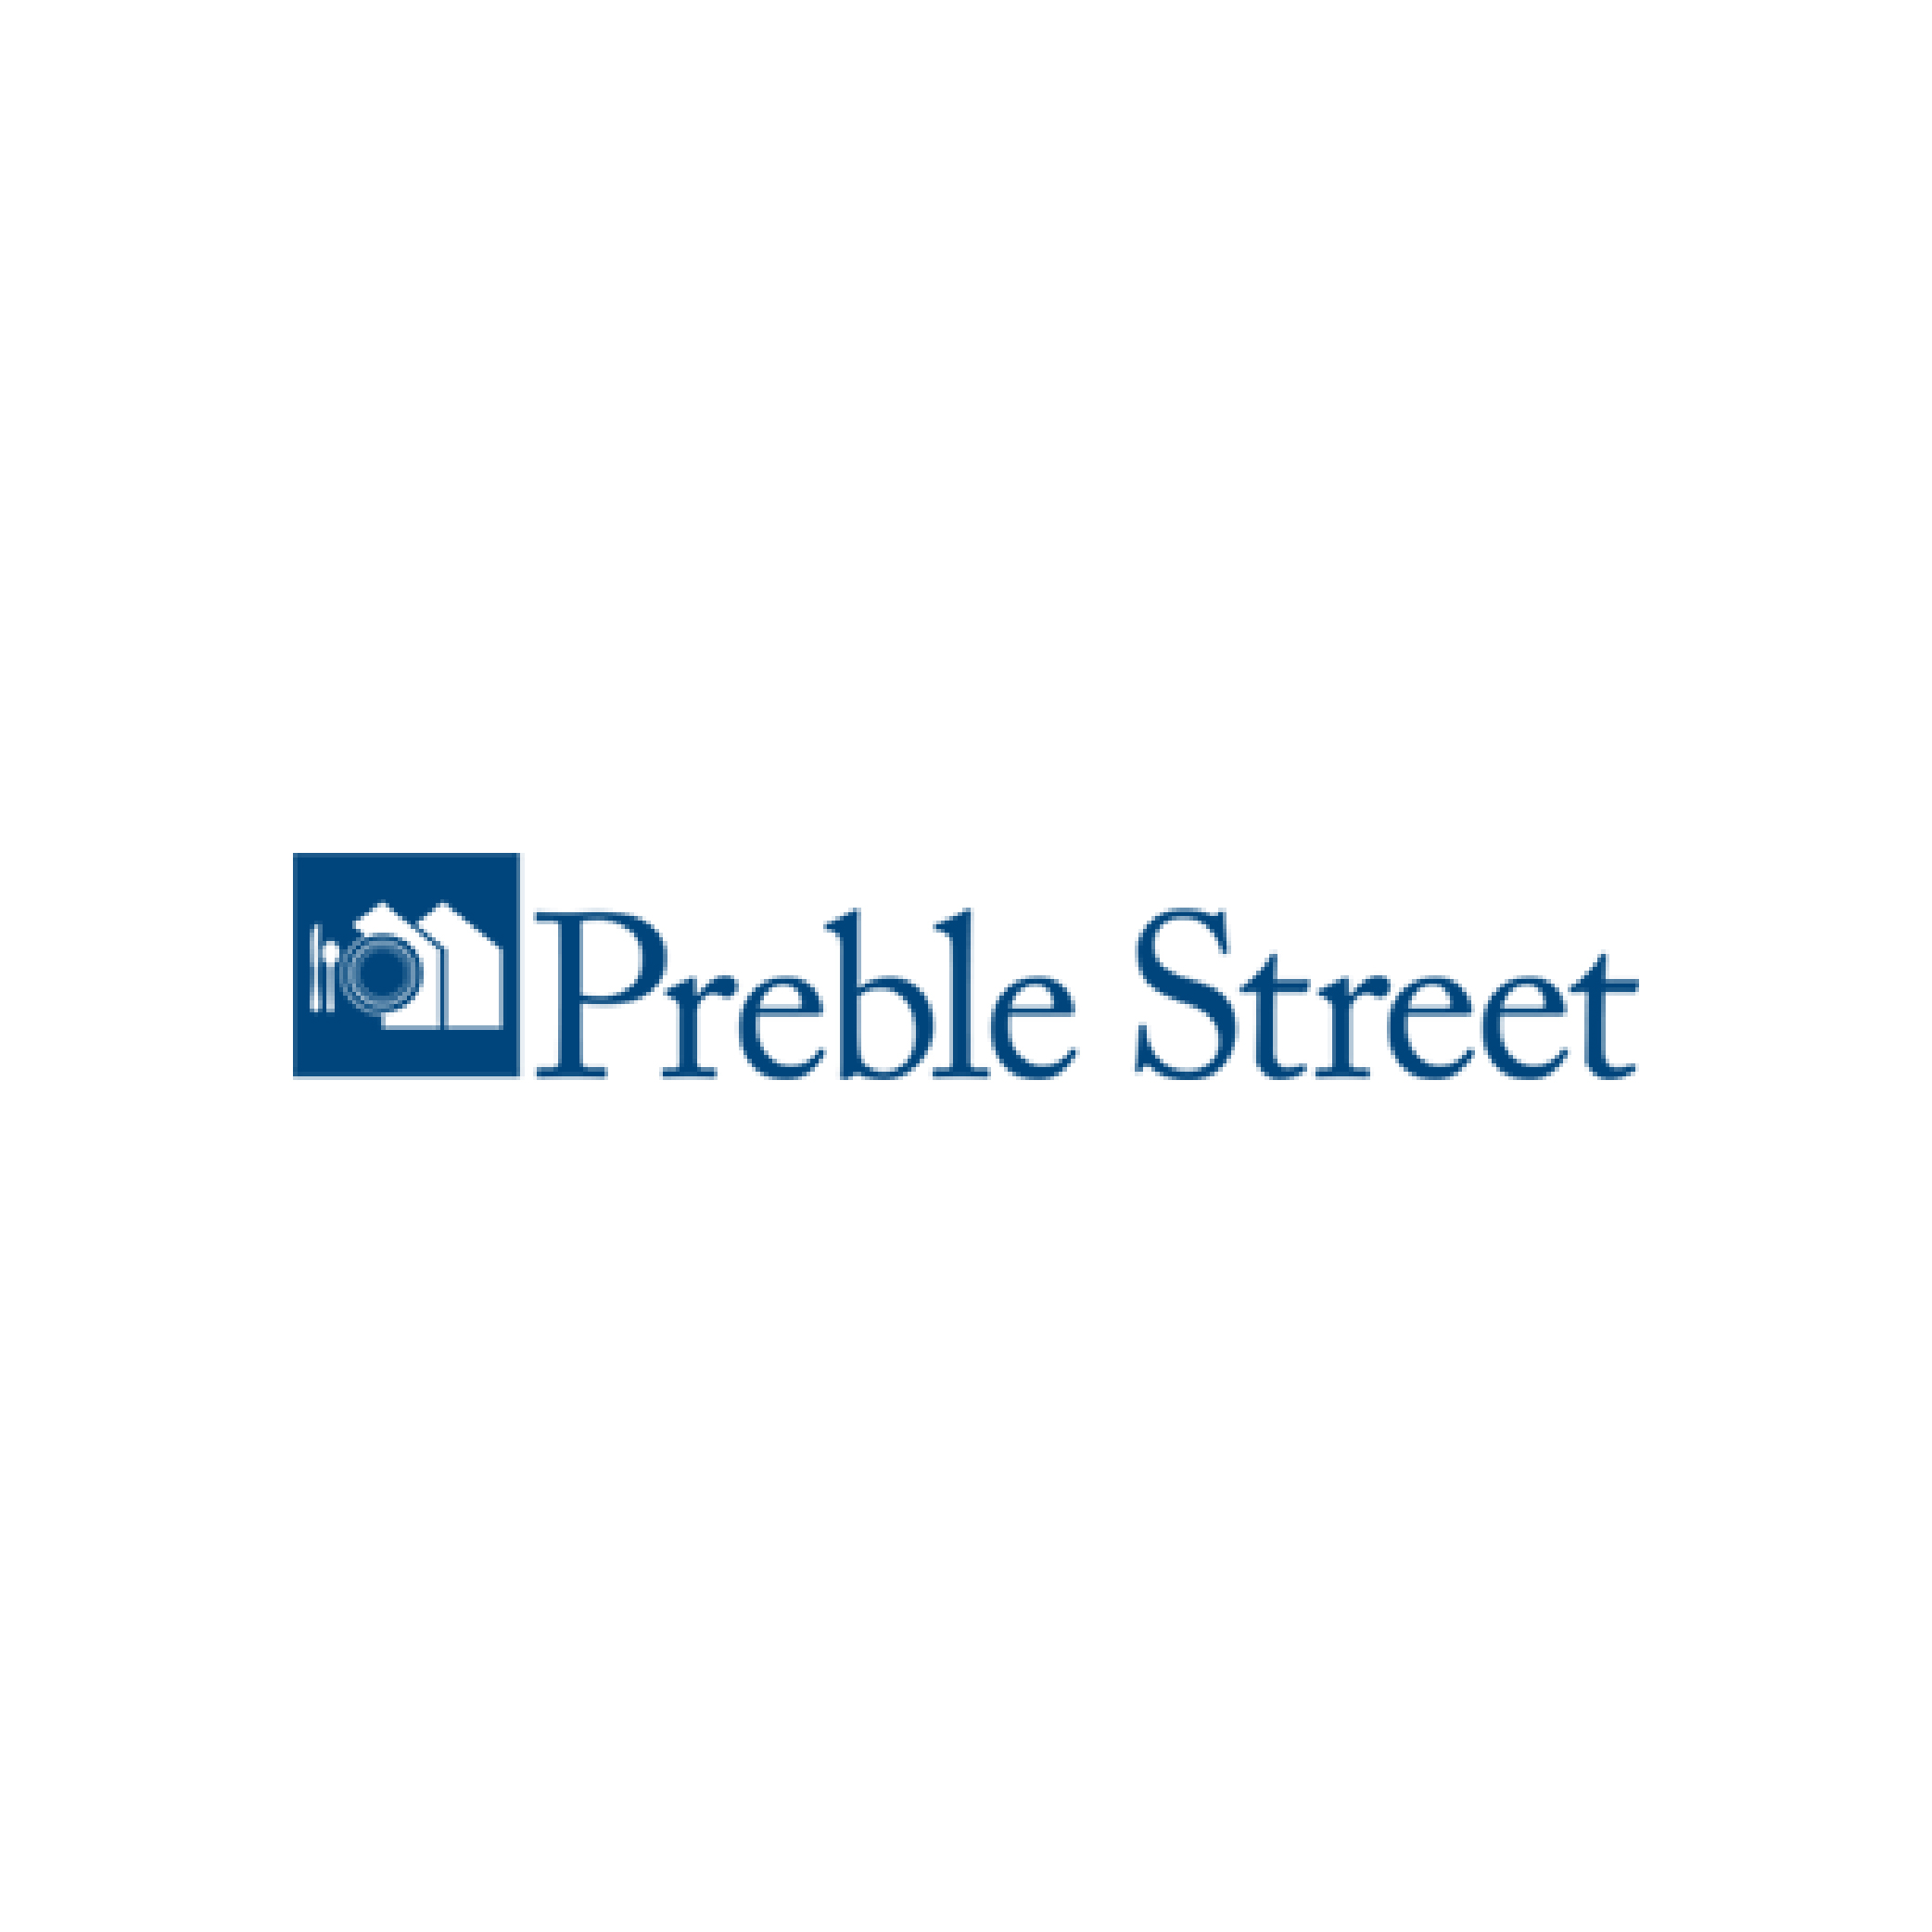 Logotipo de la calle Preble